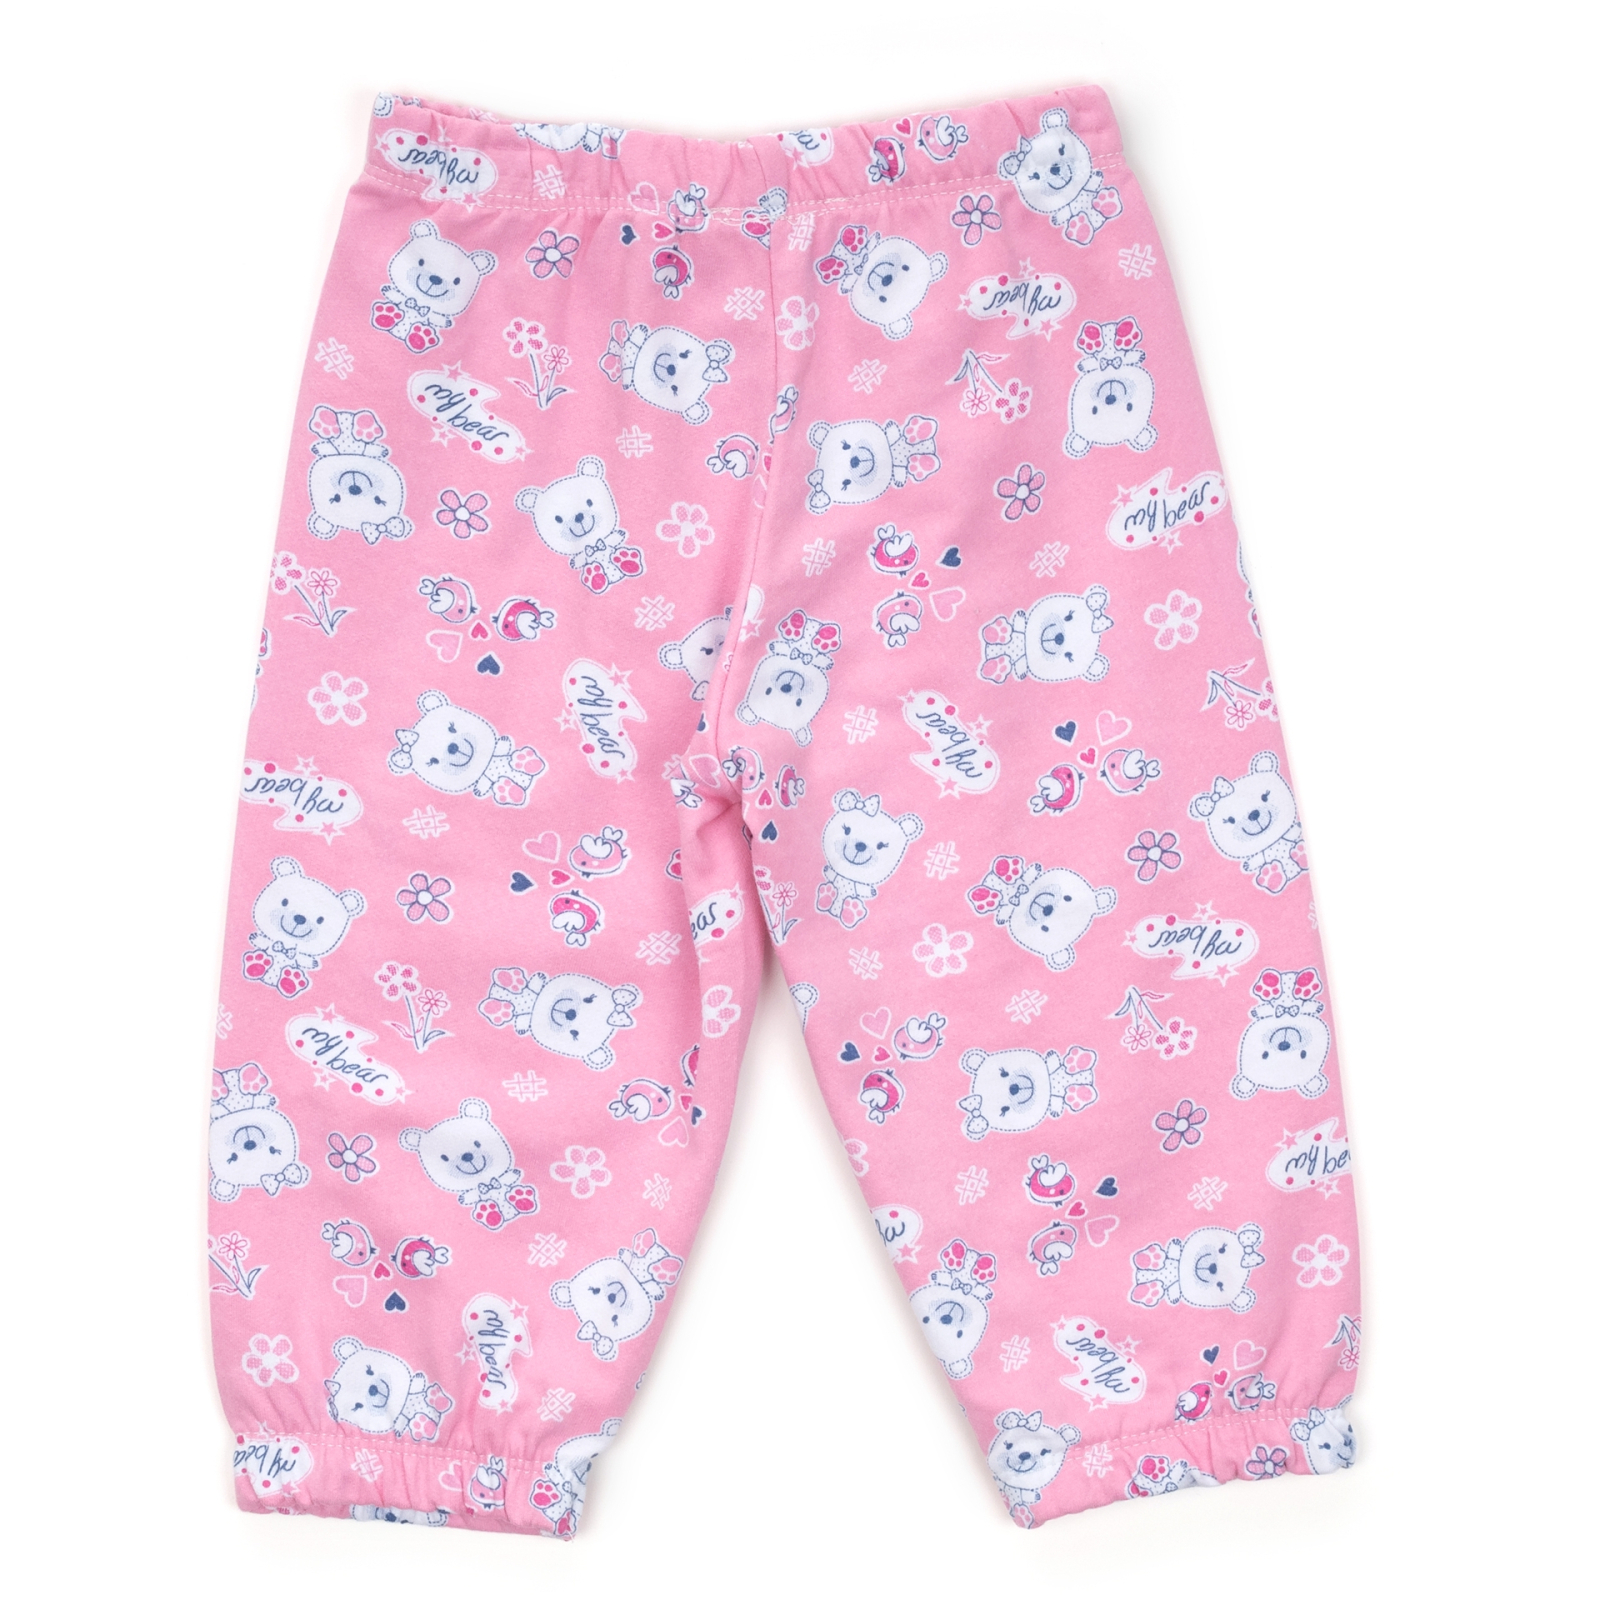 Пижама Breeze с мишками (8382-98G-pink) изображение 6